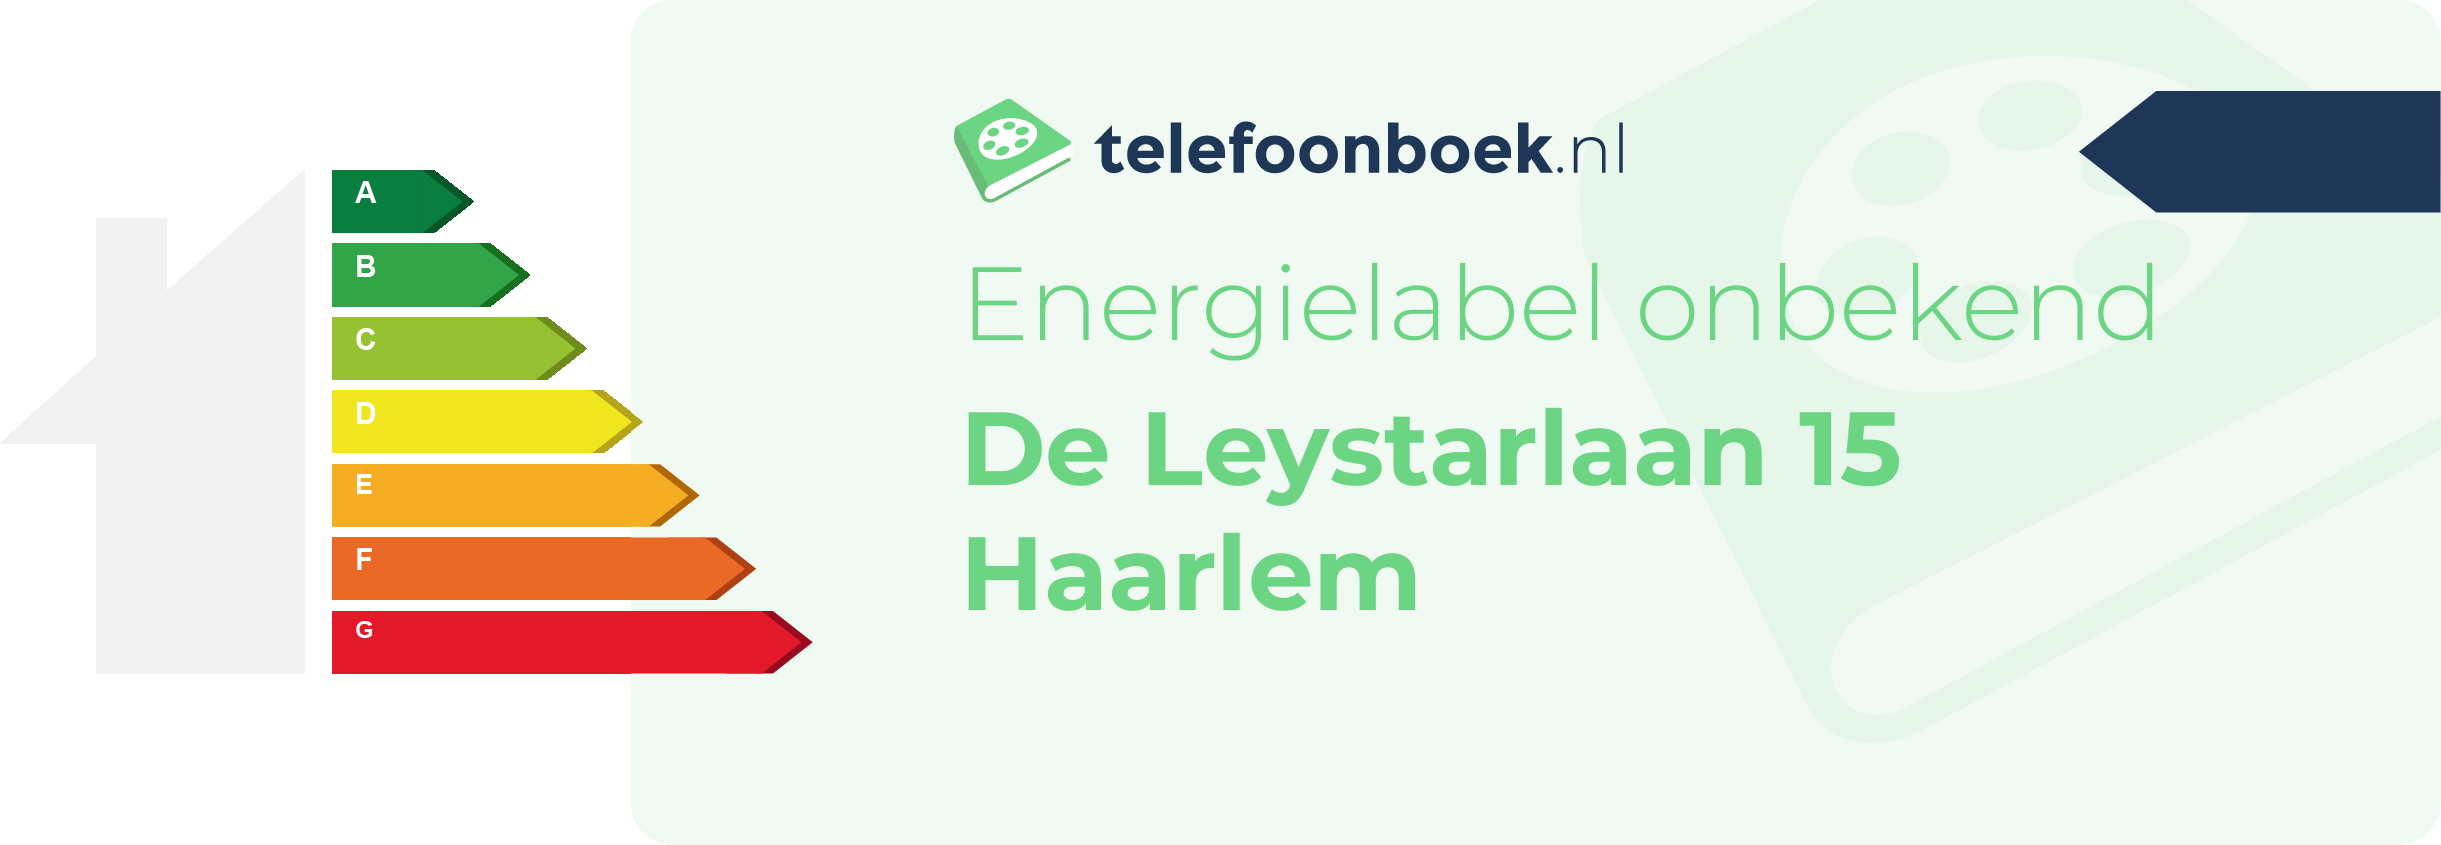 Energielabel De Leystarlaan 15 Haarlem